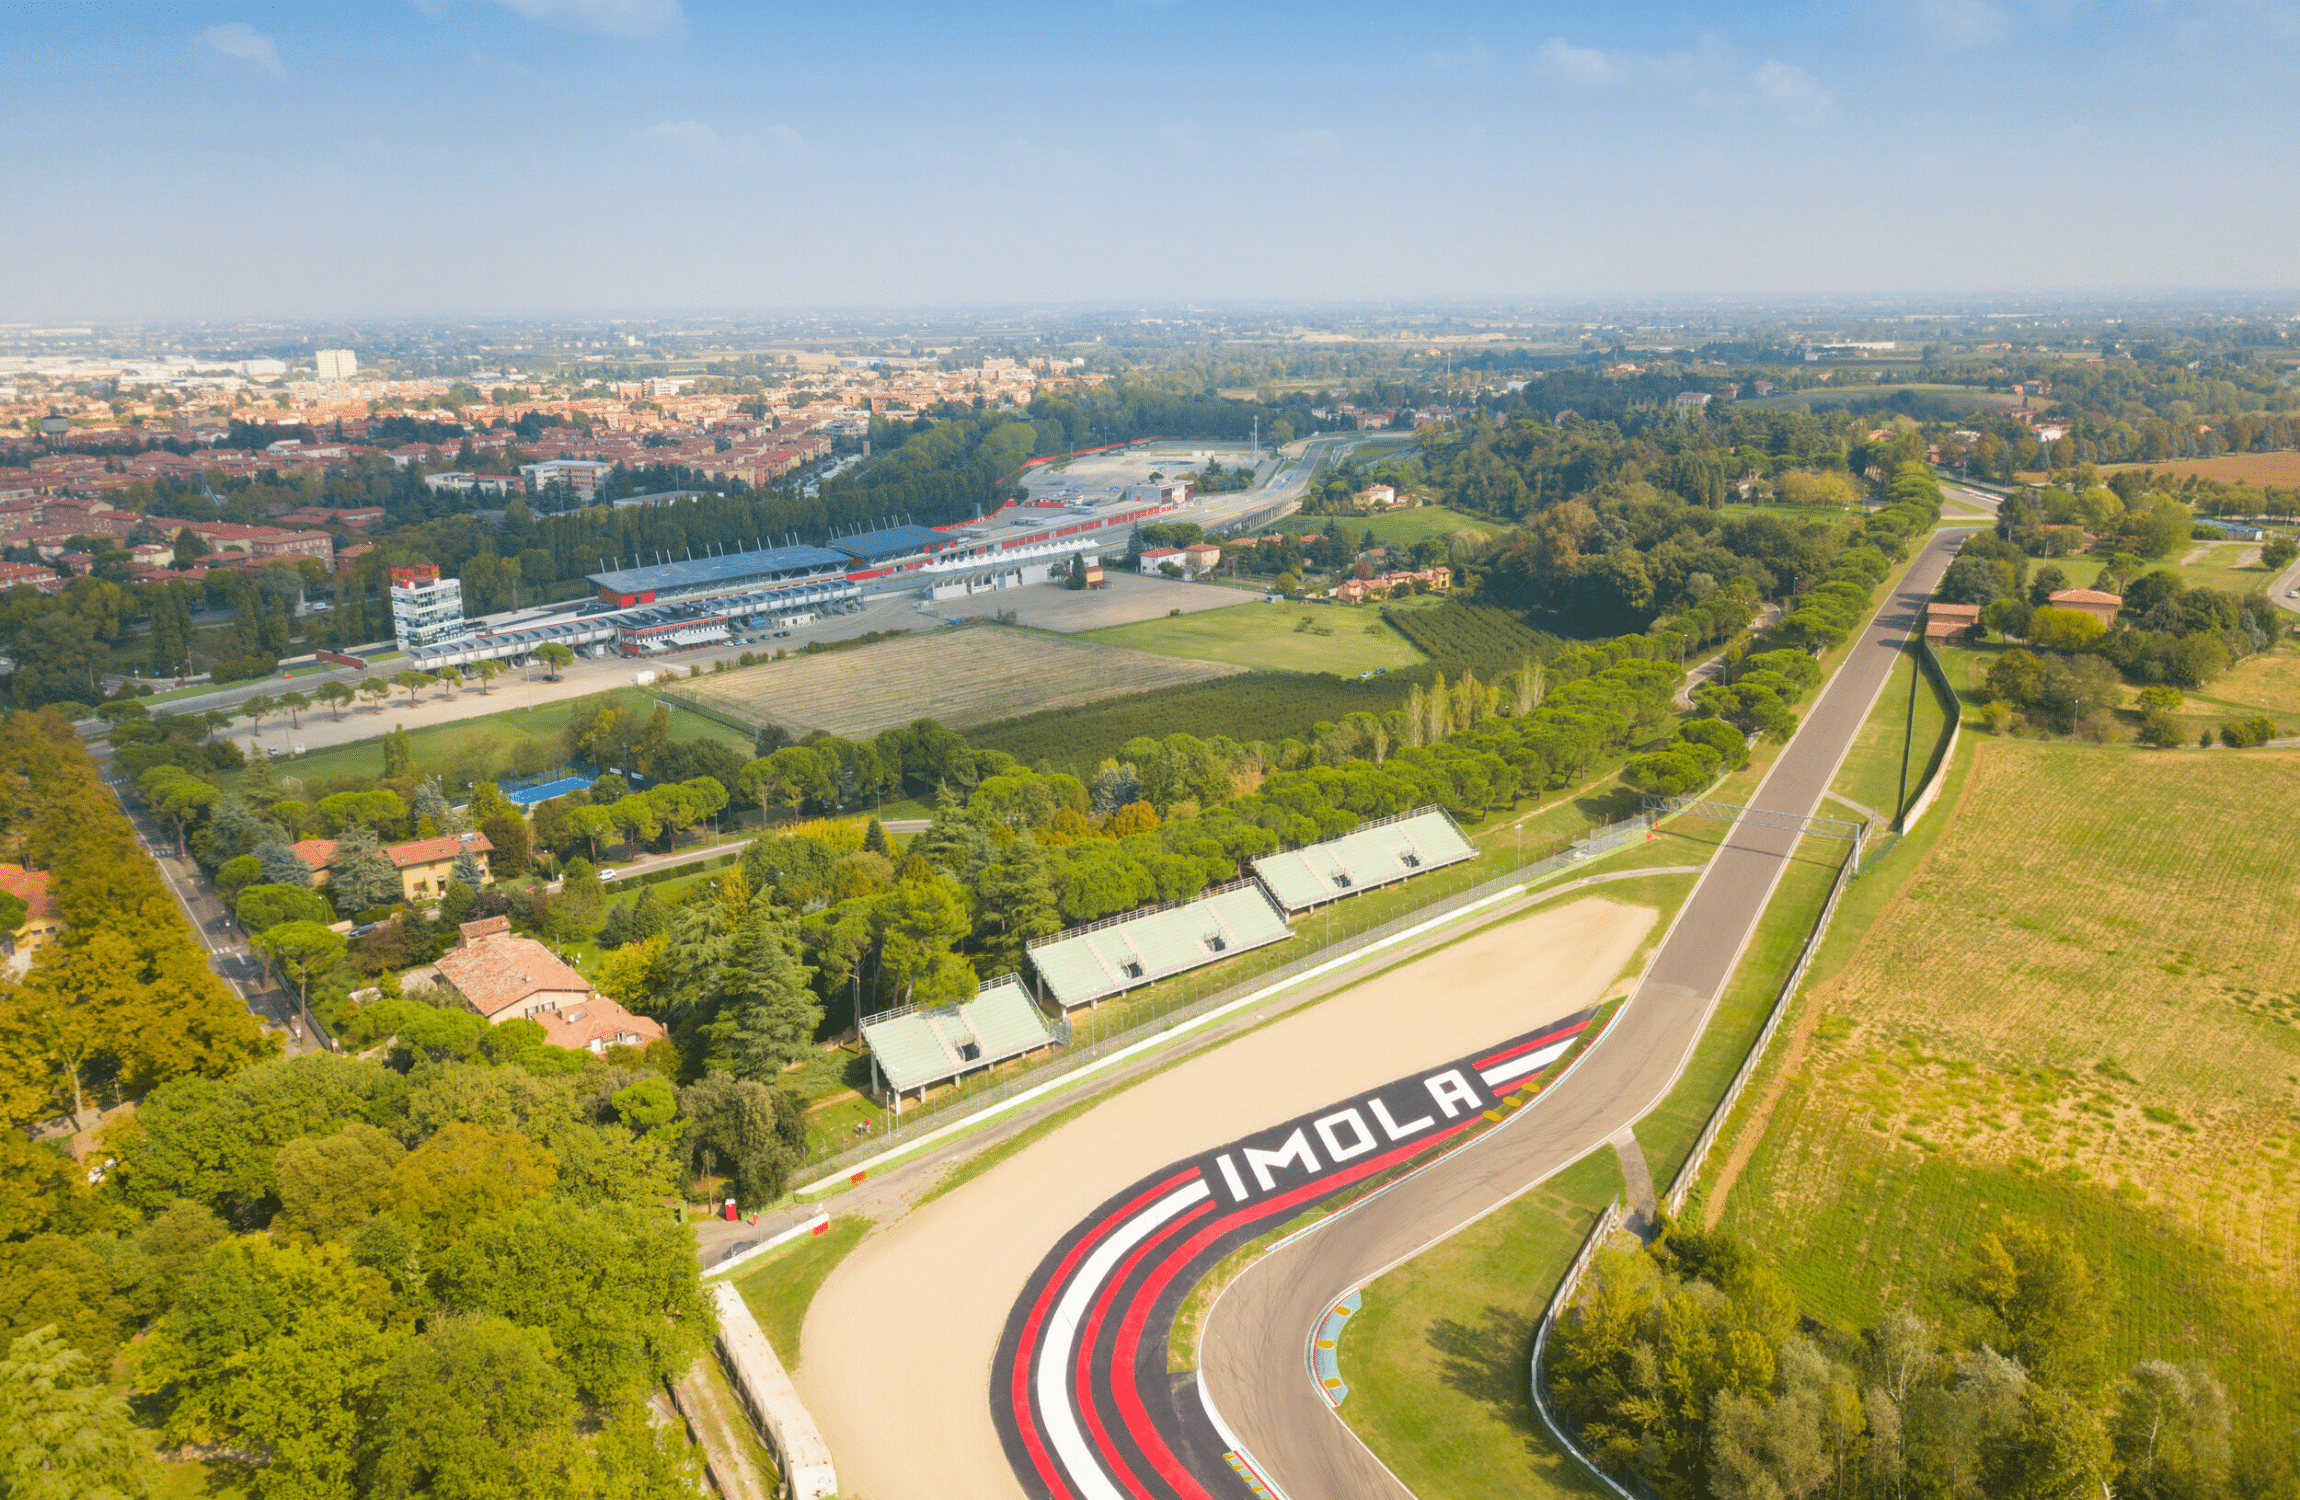 Imola motorsport race track Italy